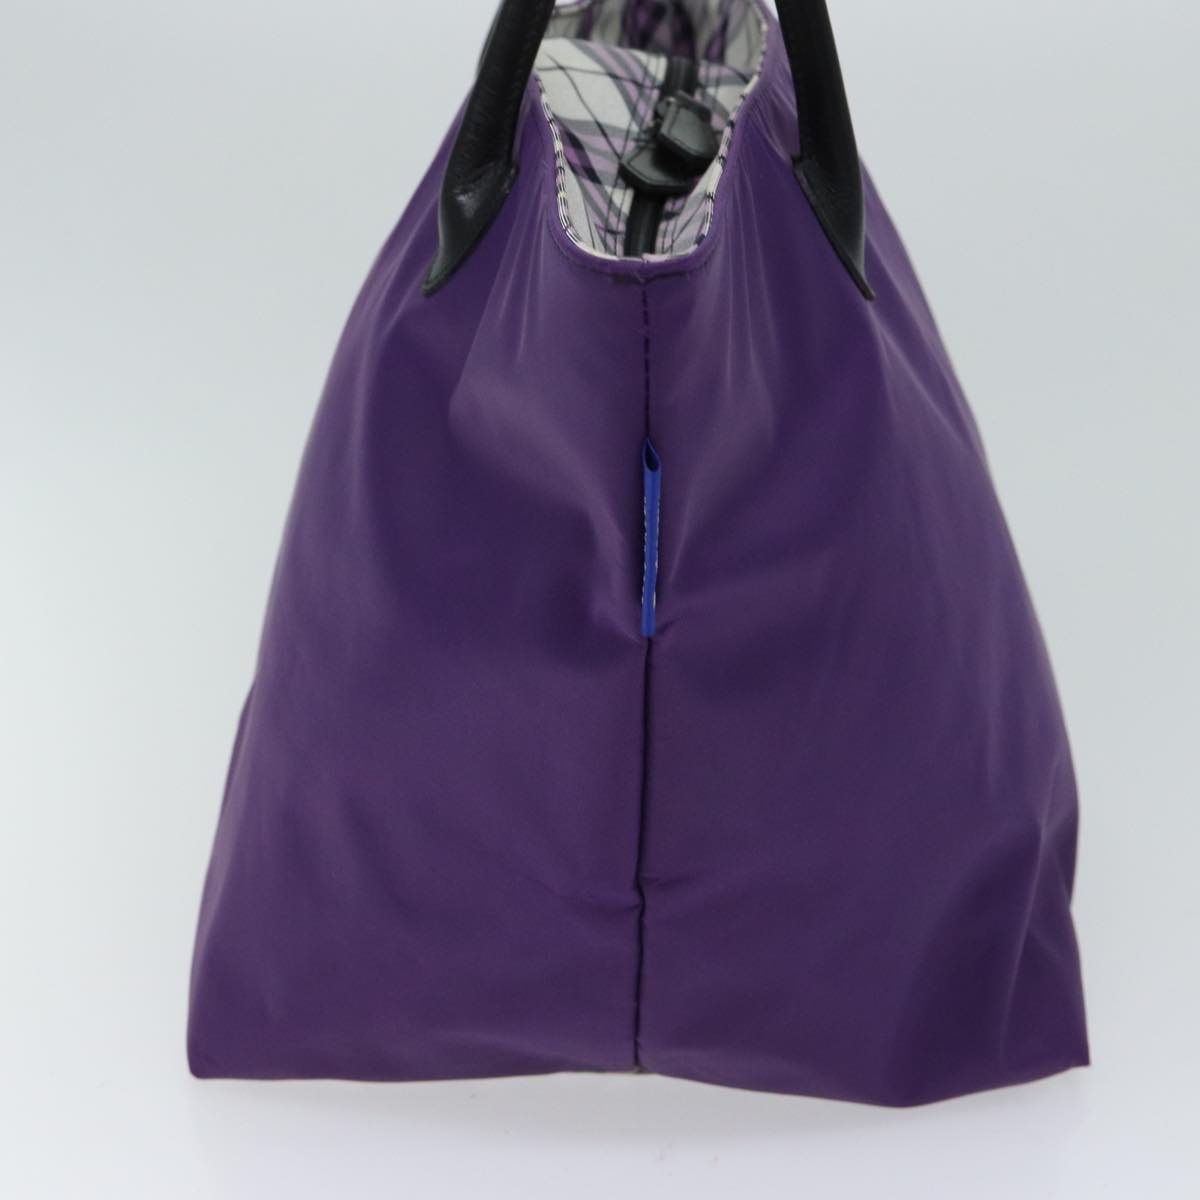 Burberrys Nova Check Blue Label Tote Bag Nylon Purple Auth bs13575